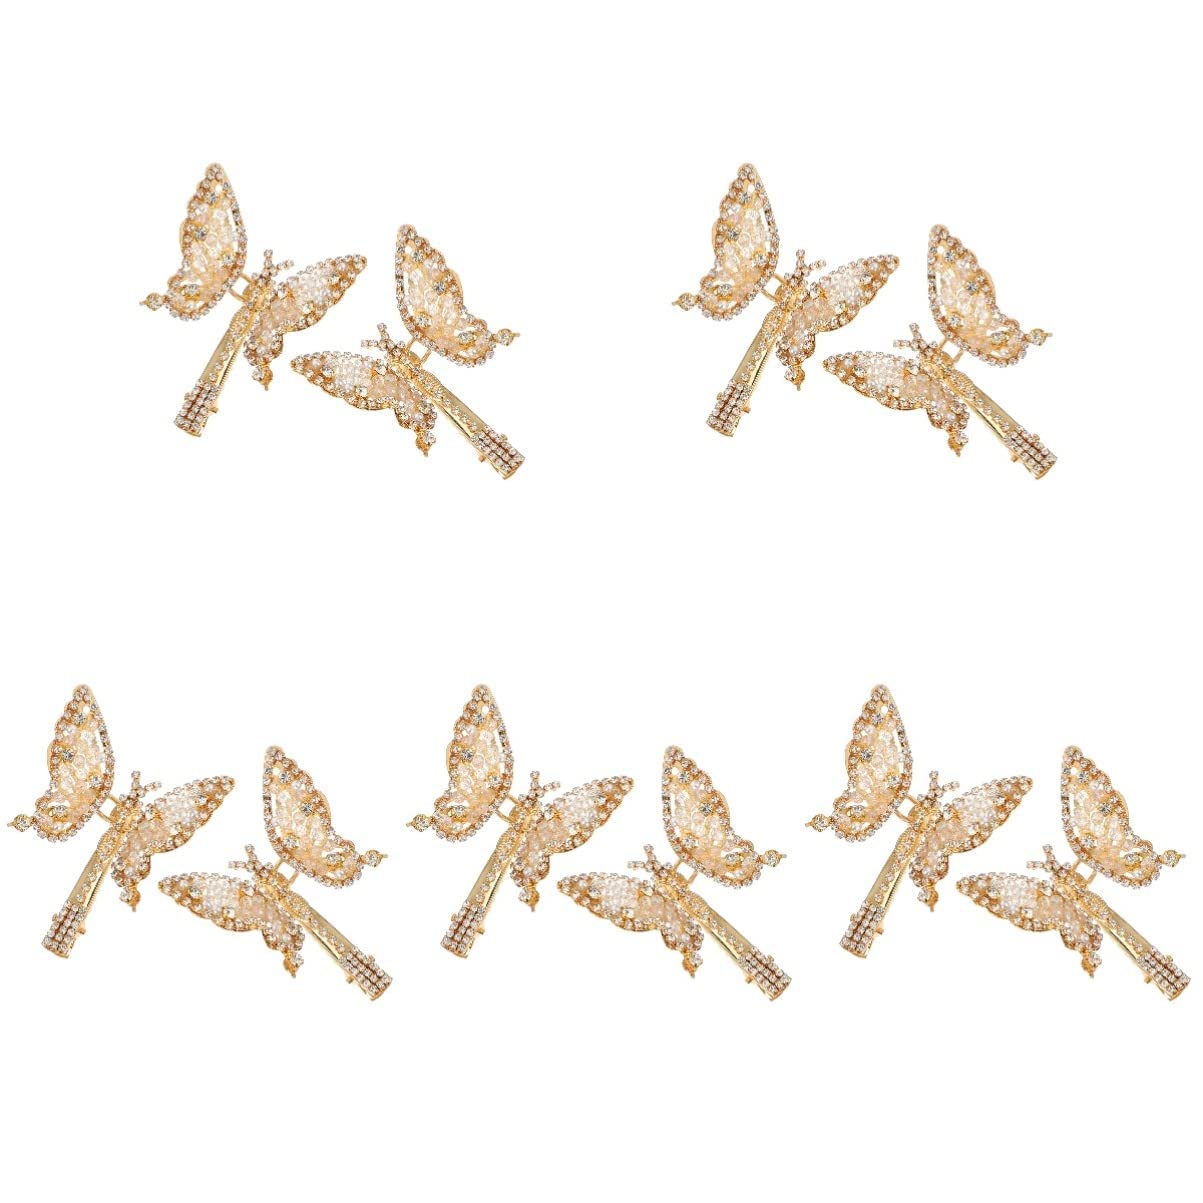 16 Stück Kristall Strass Strass Schmetterling Haarspangen Schmetterling Haarspangen Schmetterling Haarspangen Schmetterling Haarspangen Haarspangen ( Color : Goldenx4pcs , Size : 8X6X1.5CMx5pcs )